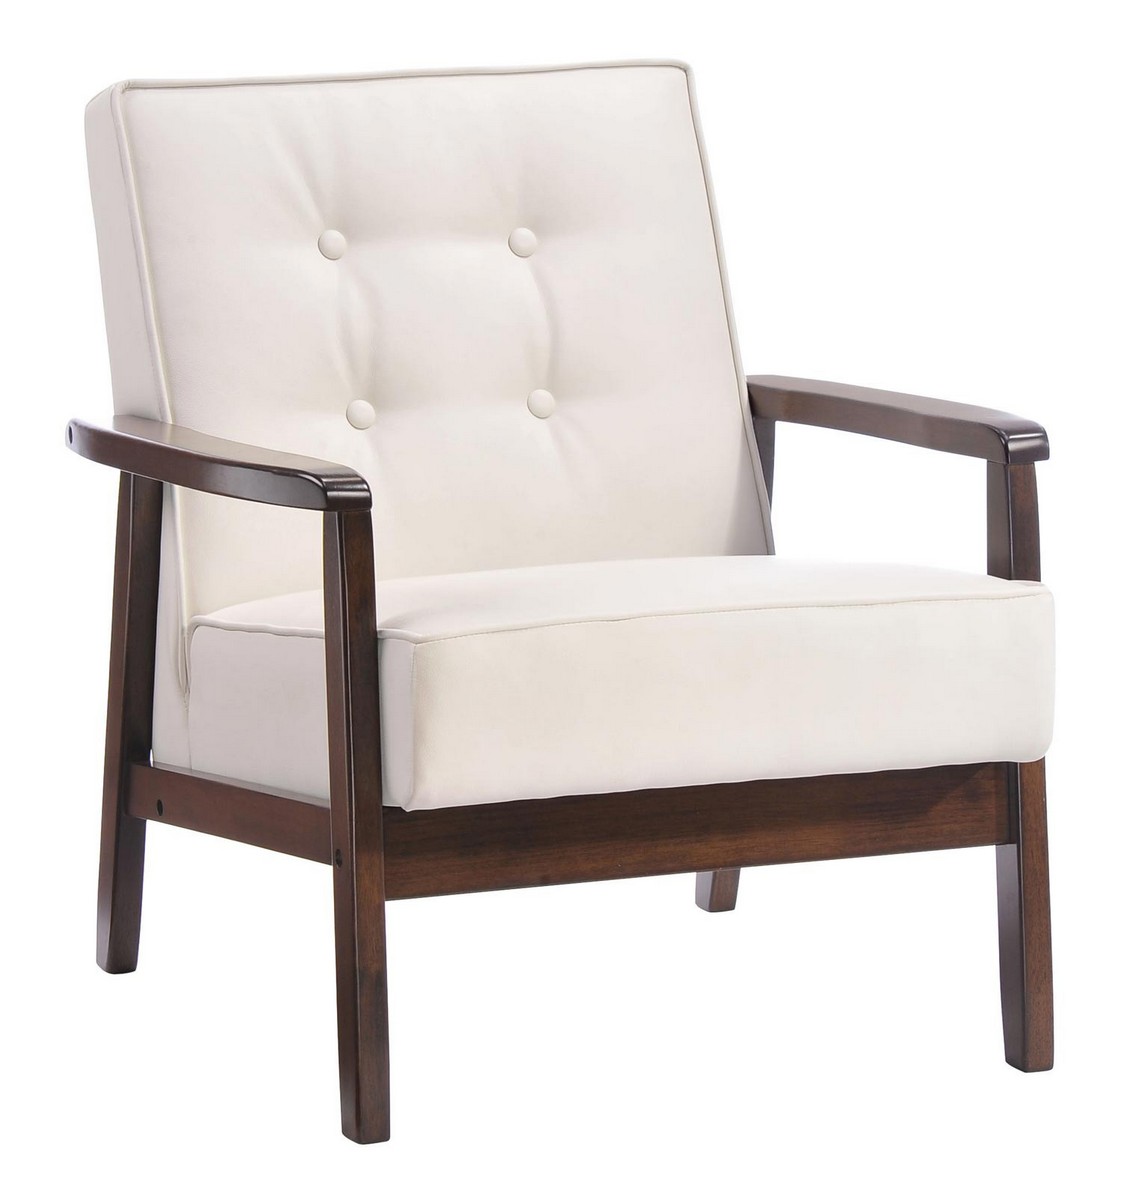 Zuo Modern Aventura Arm Chair - White